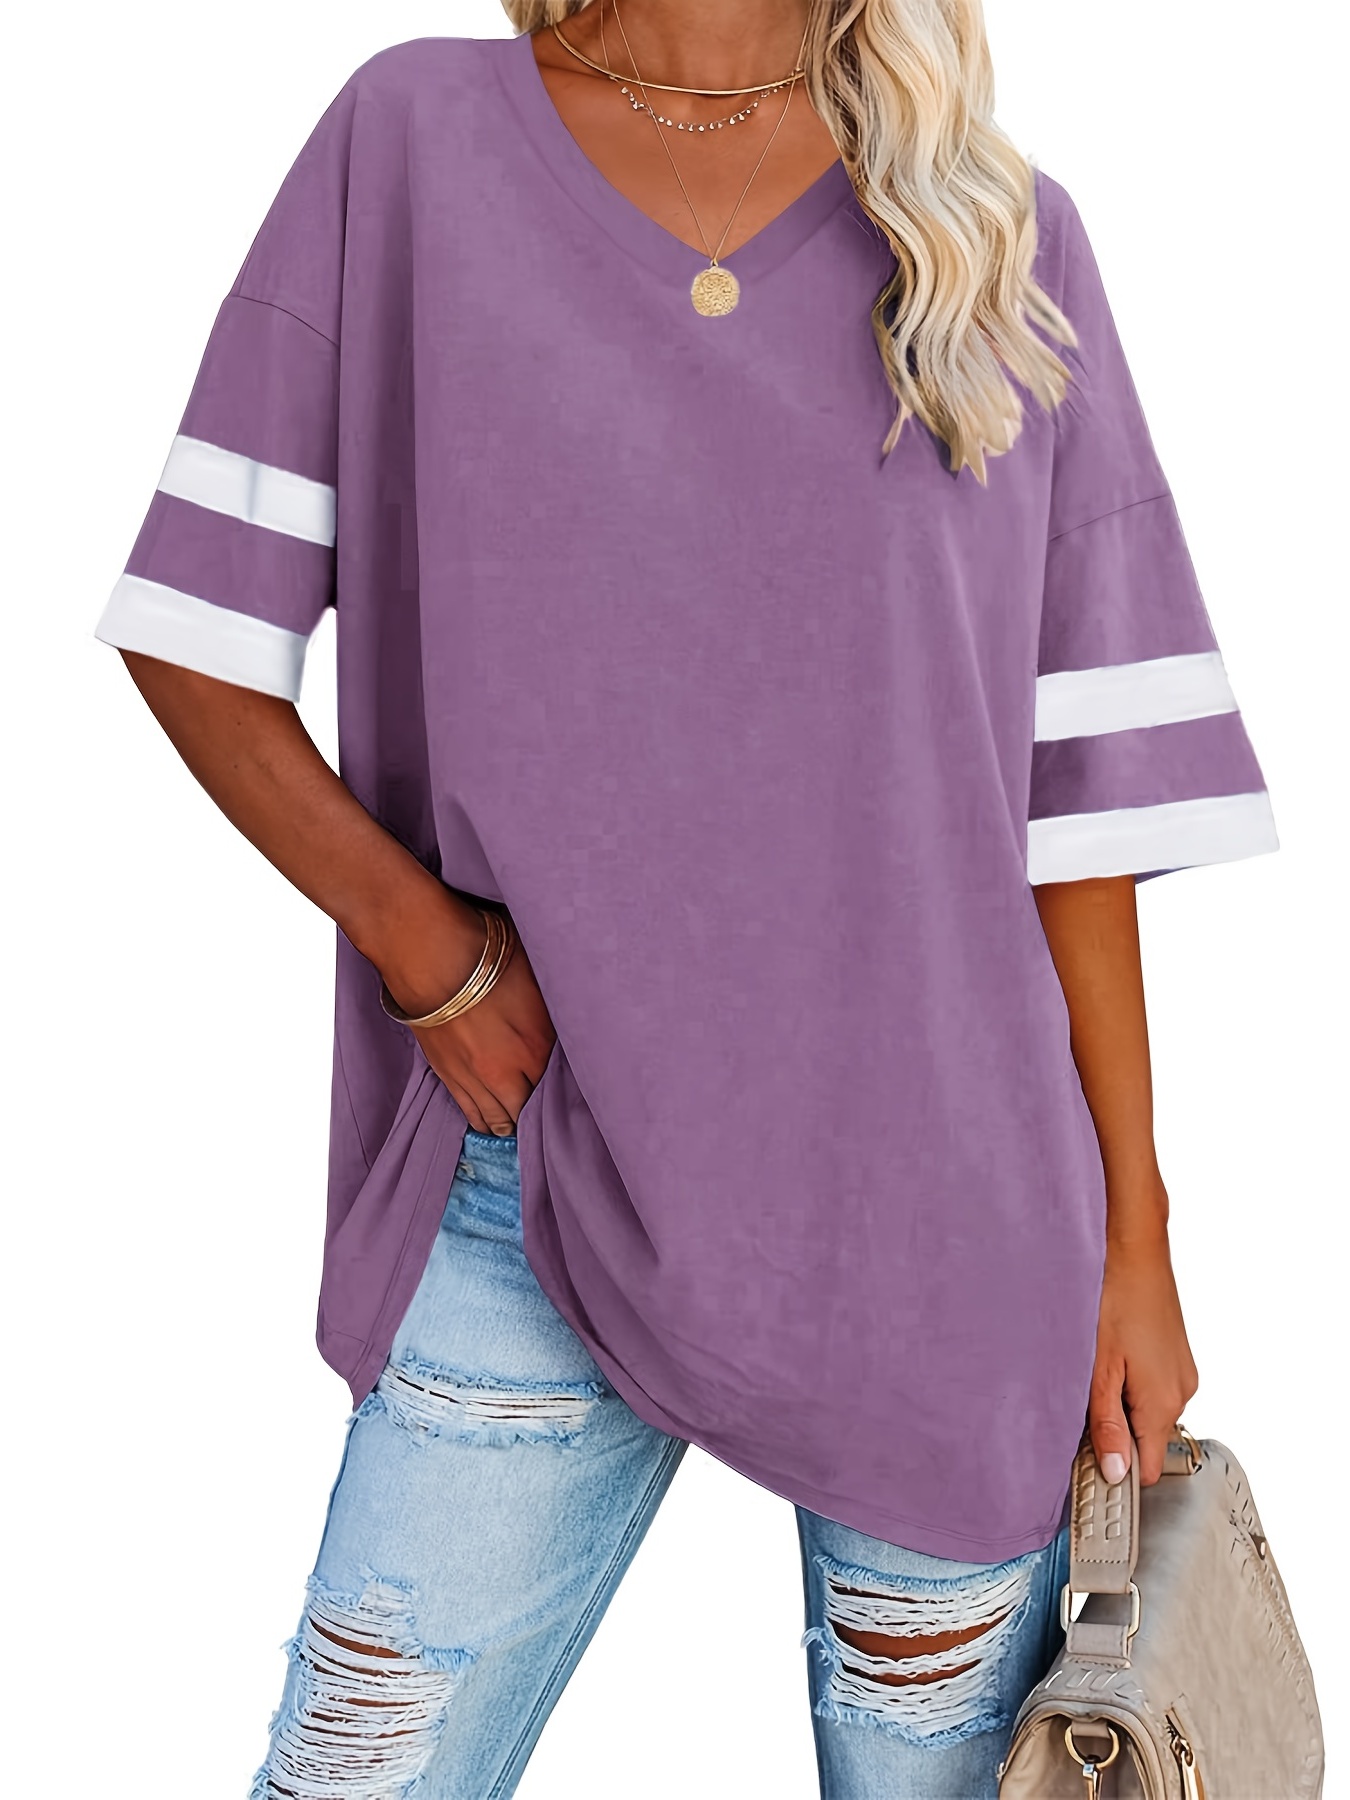 Buy Tshirts Buddy Women's Cotton Half Sleeve Printed Oversized Off